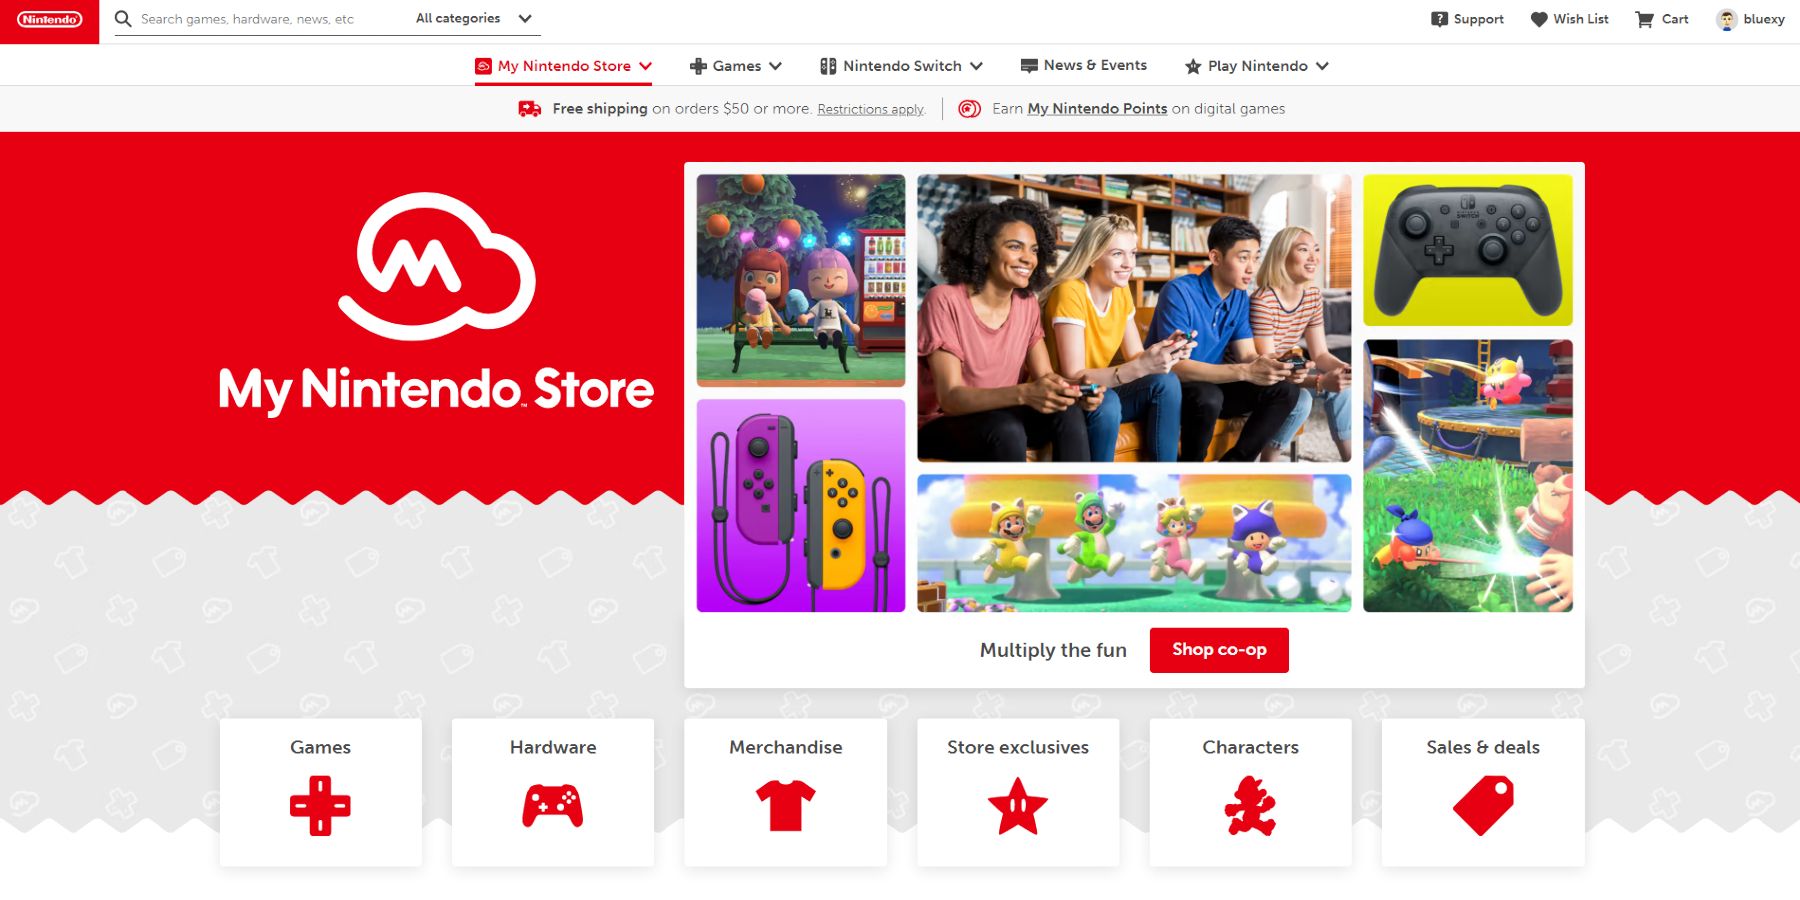 Hardware - My Nintendo Store - Nintendo Official Site